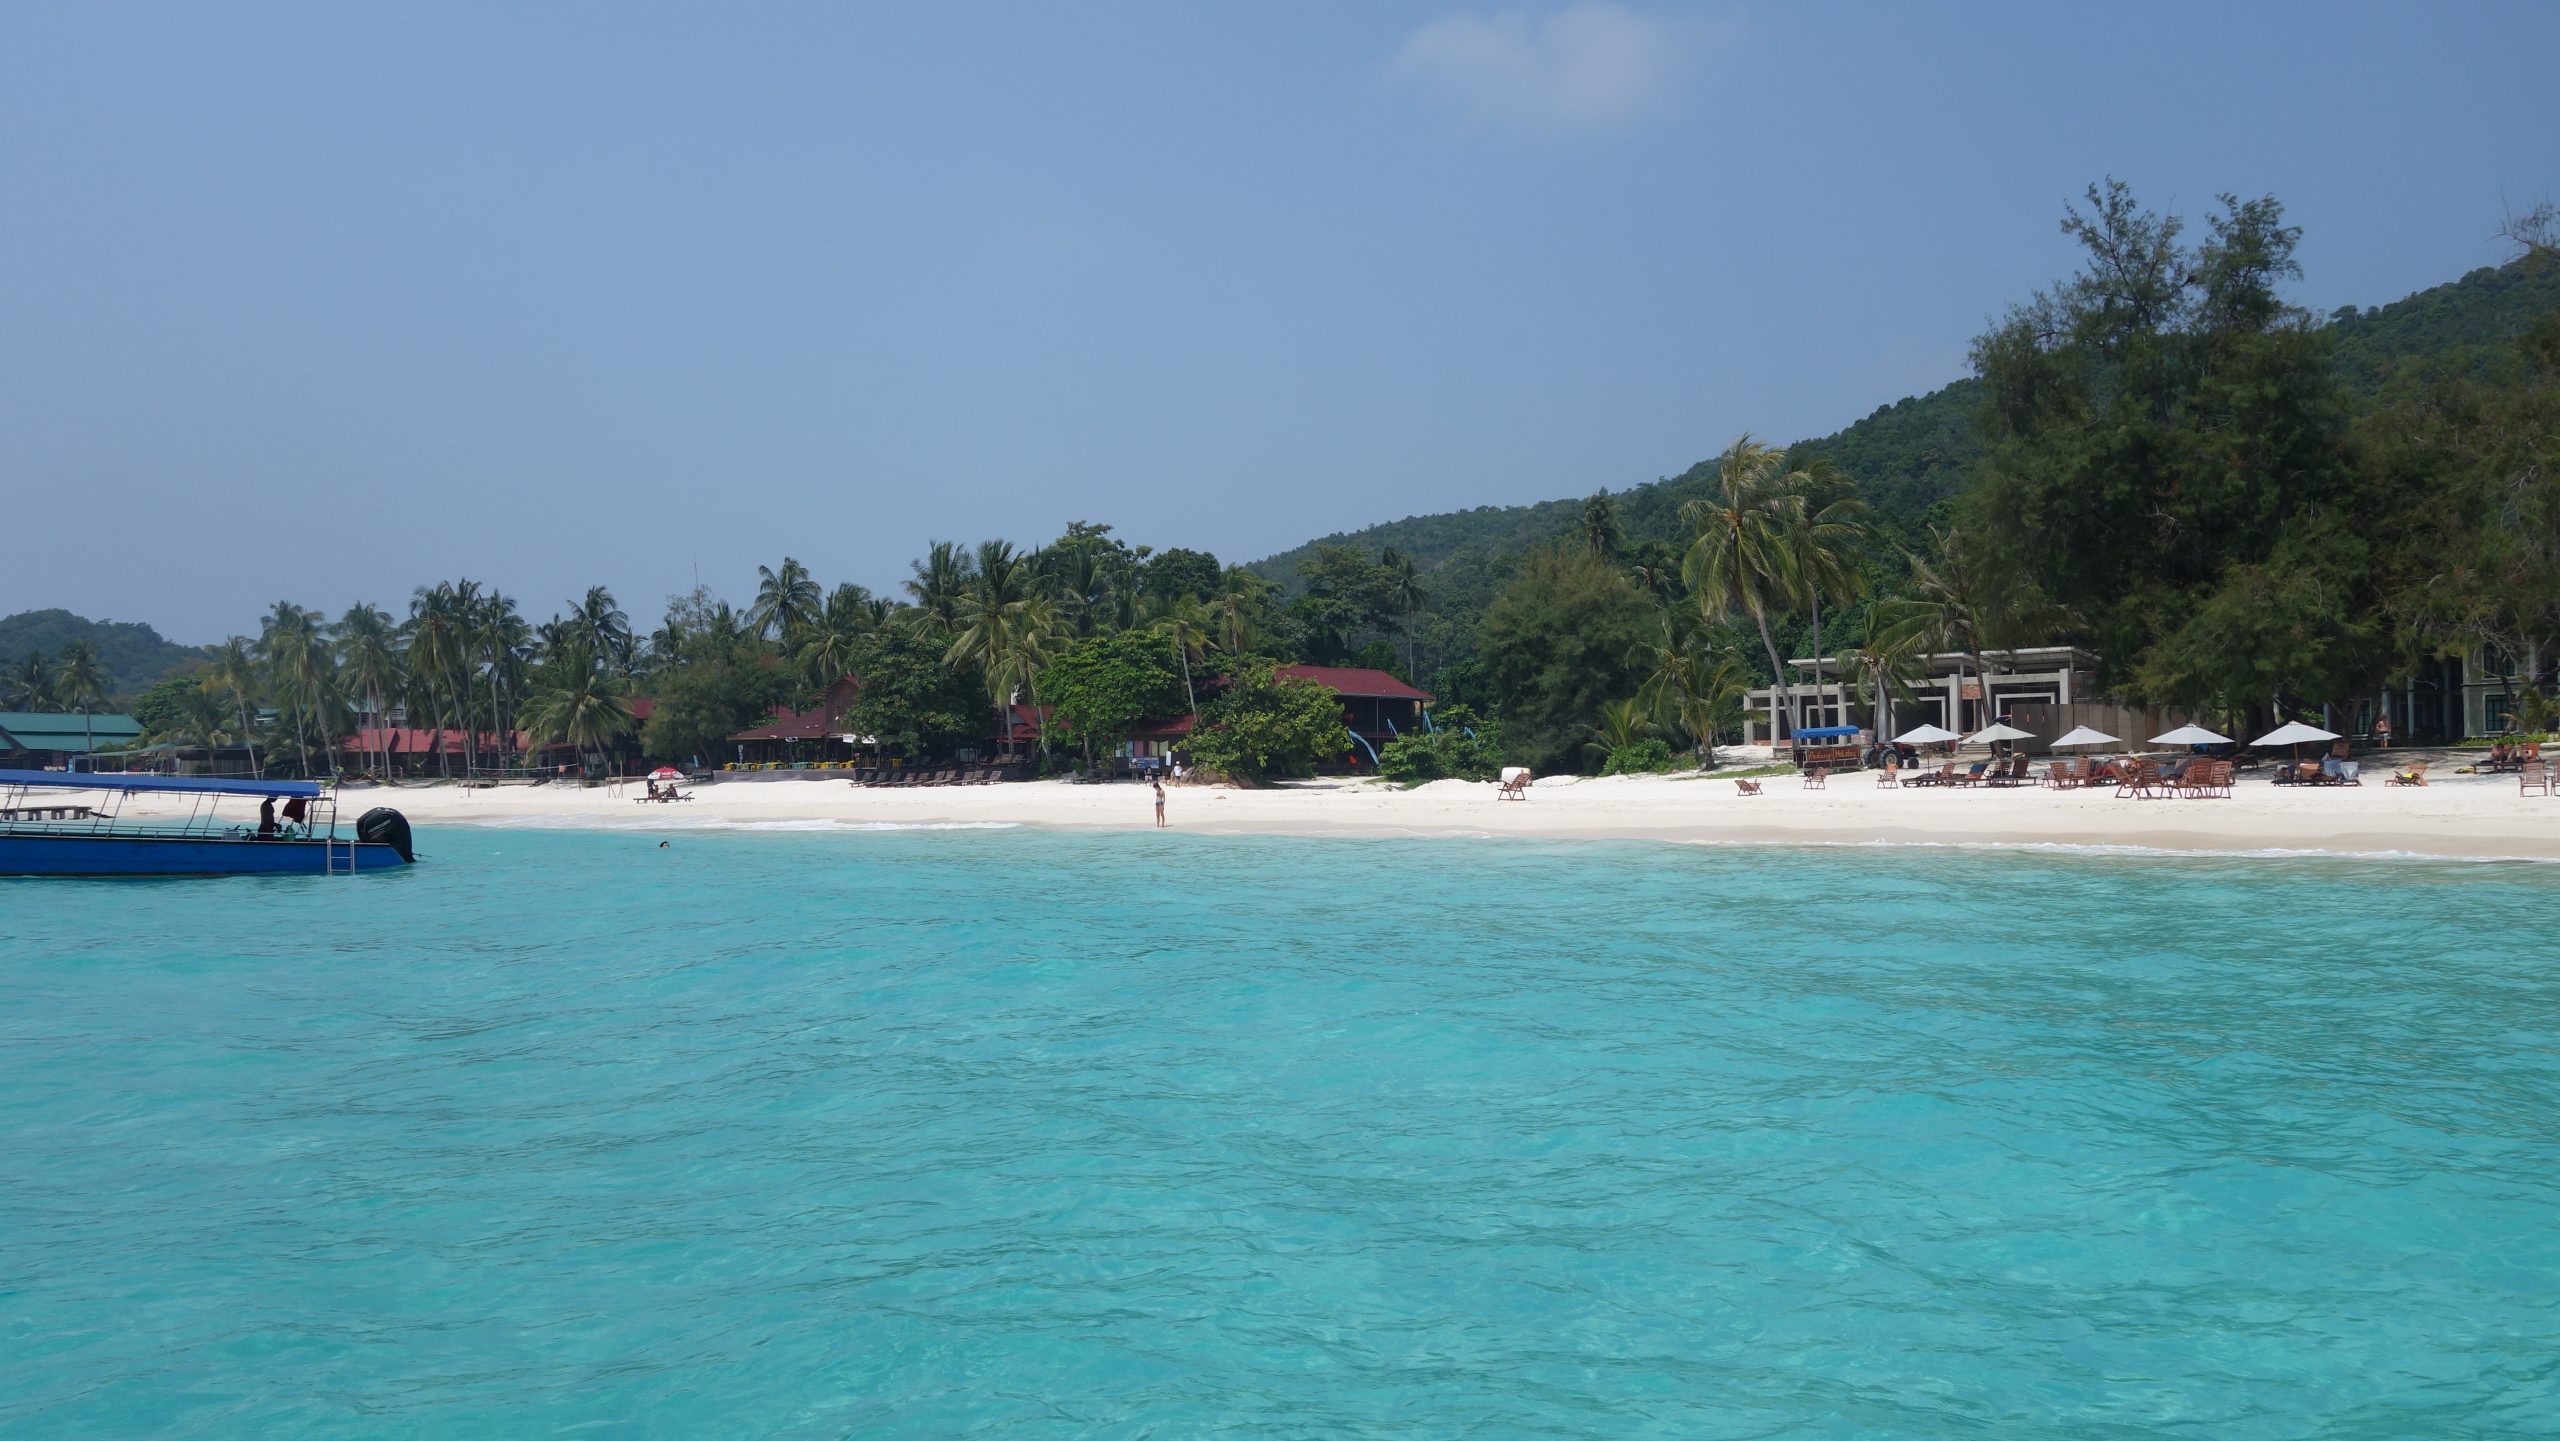 Pulau Redang, en septembre 2015